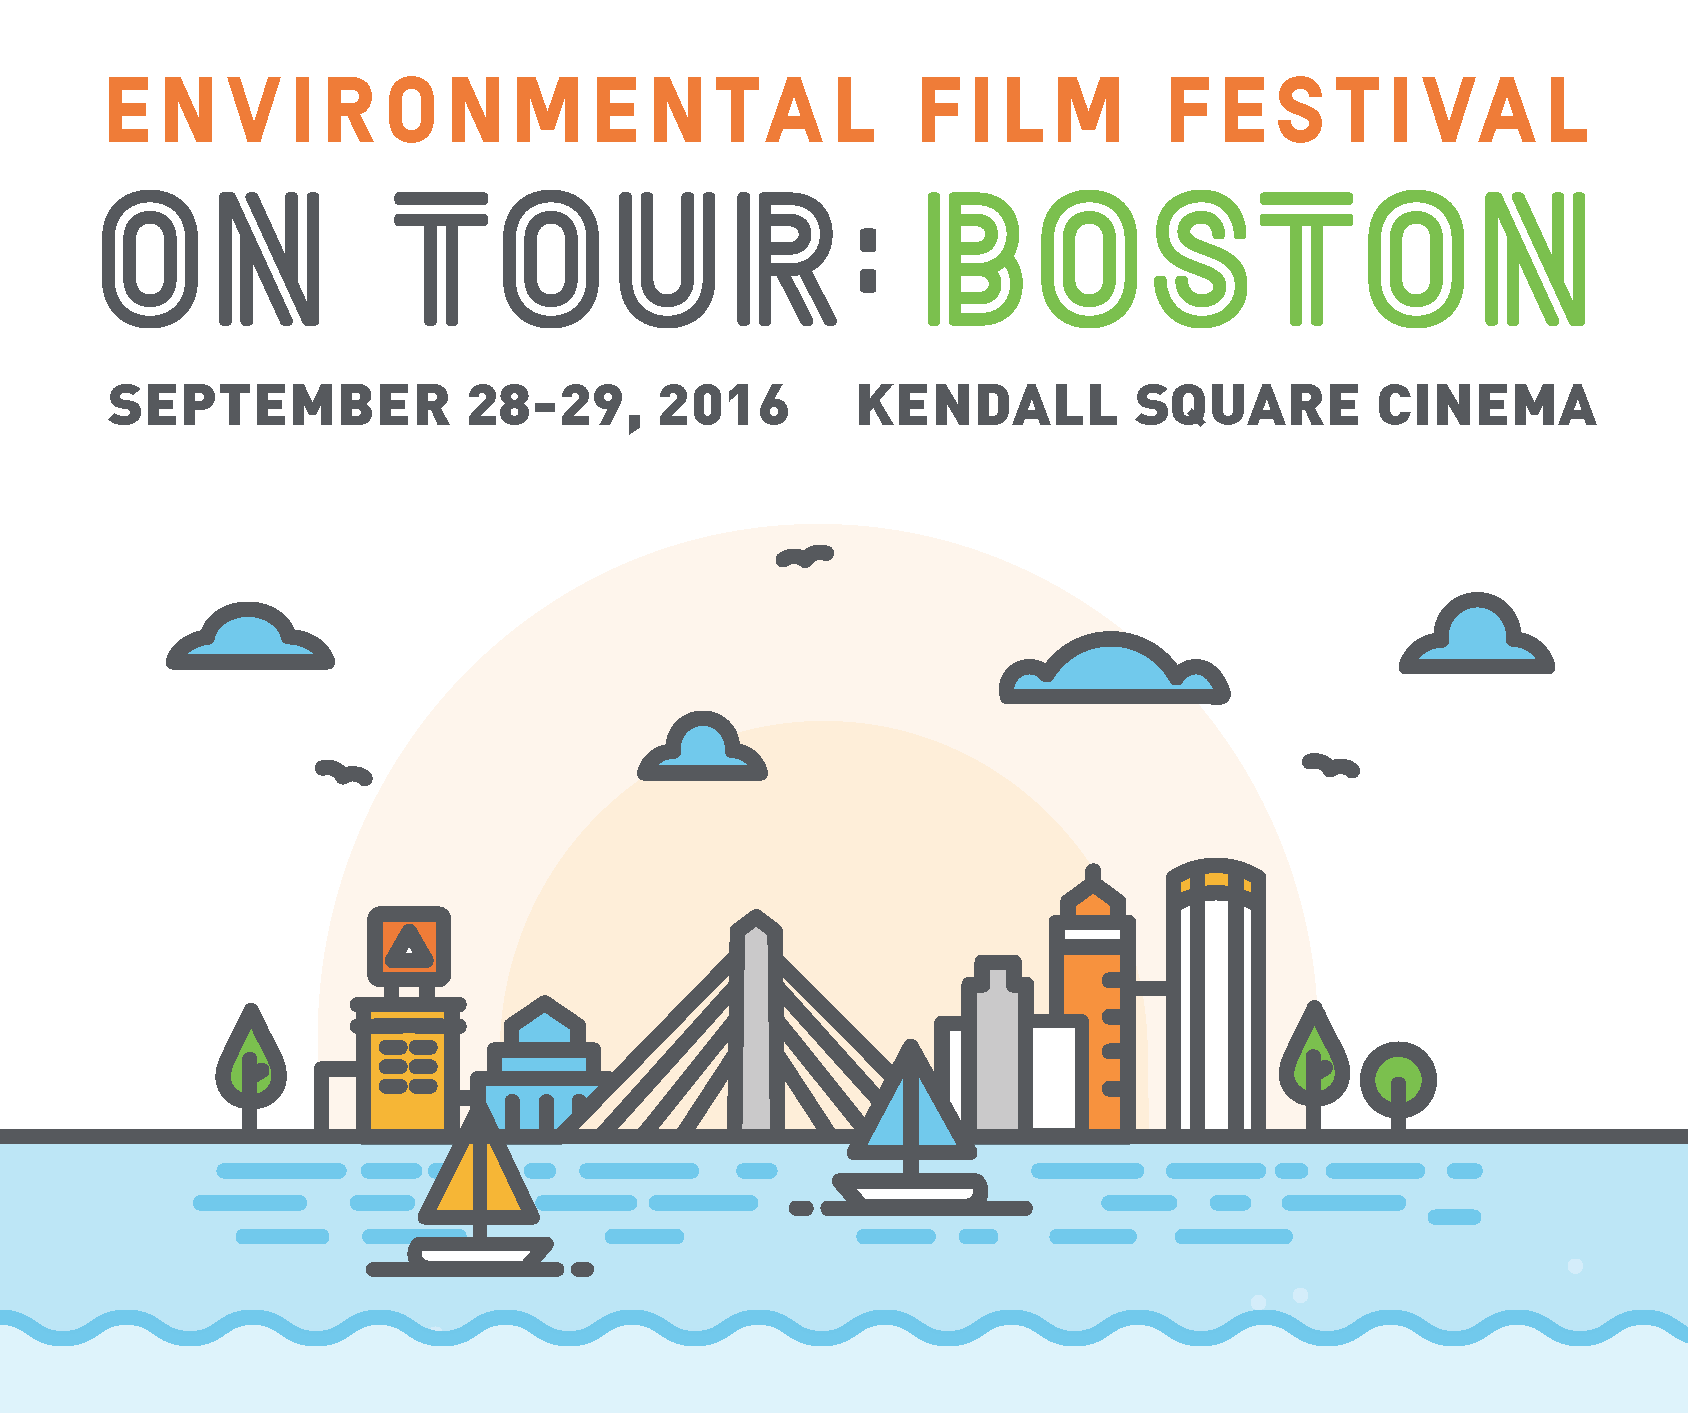 DC Environmental Film Festival in Boston_TIE